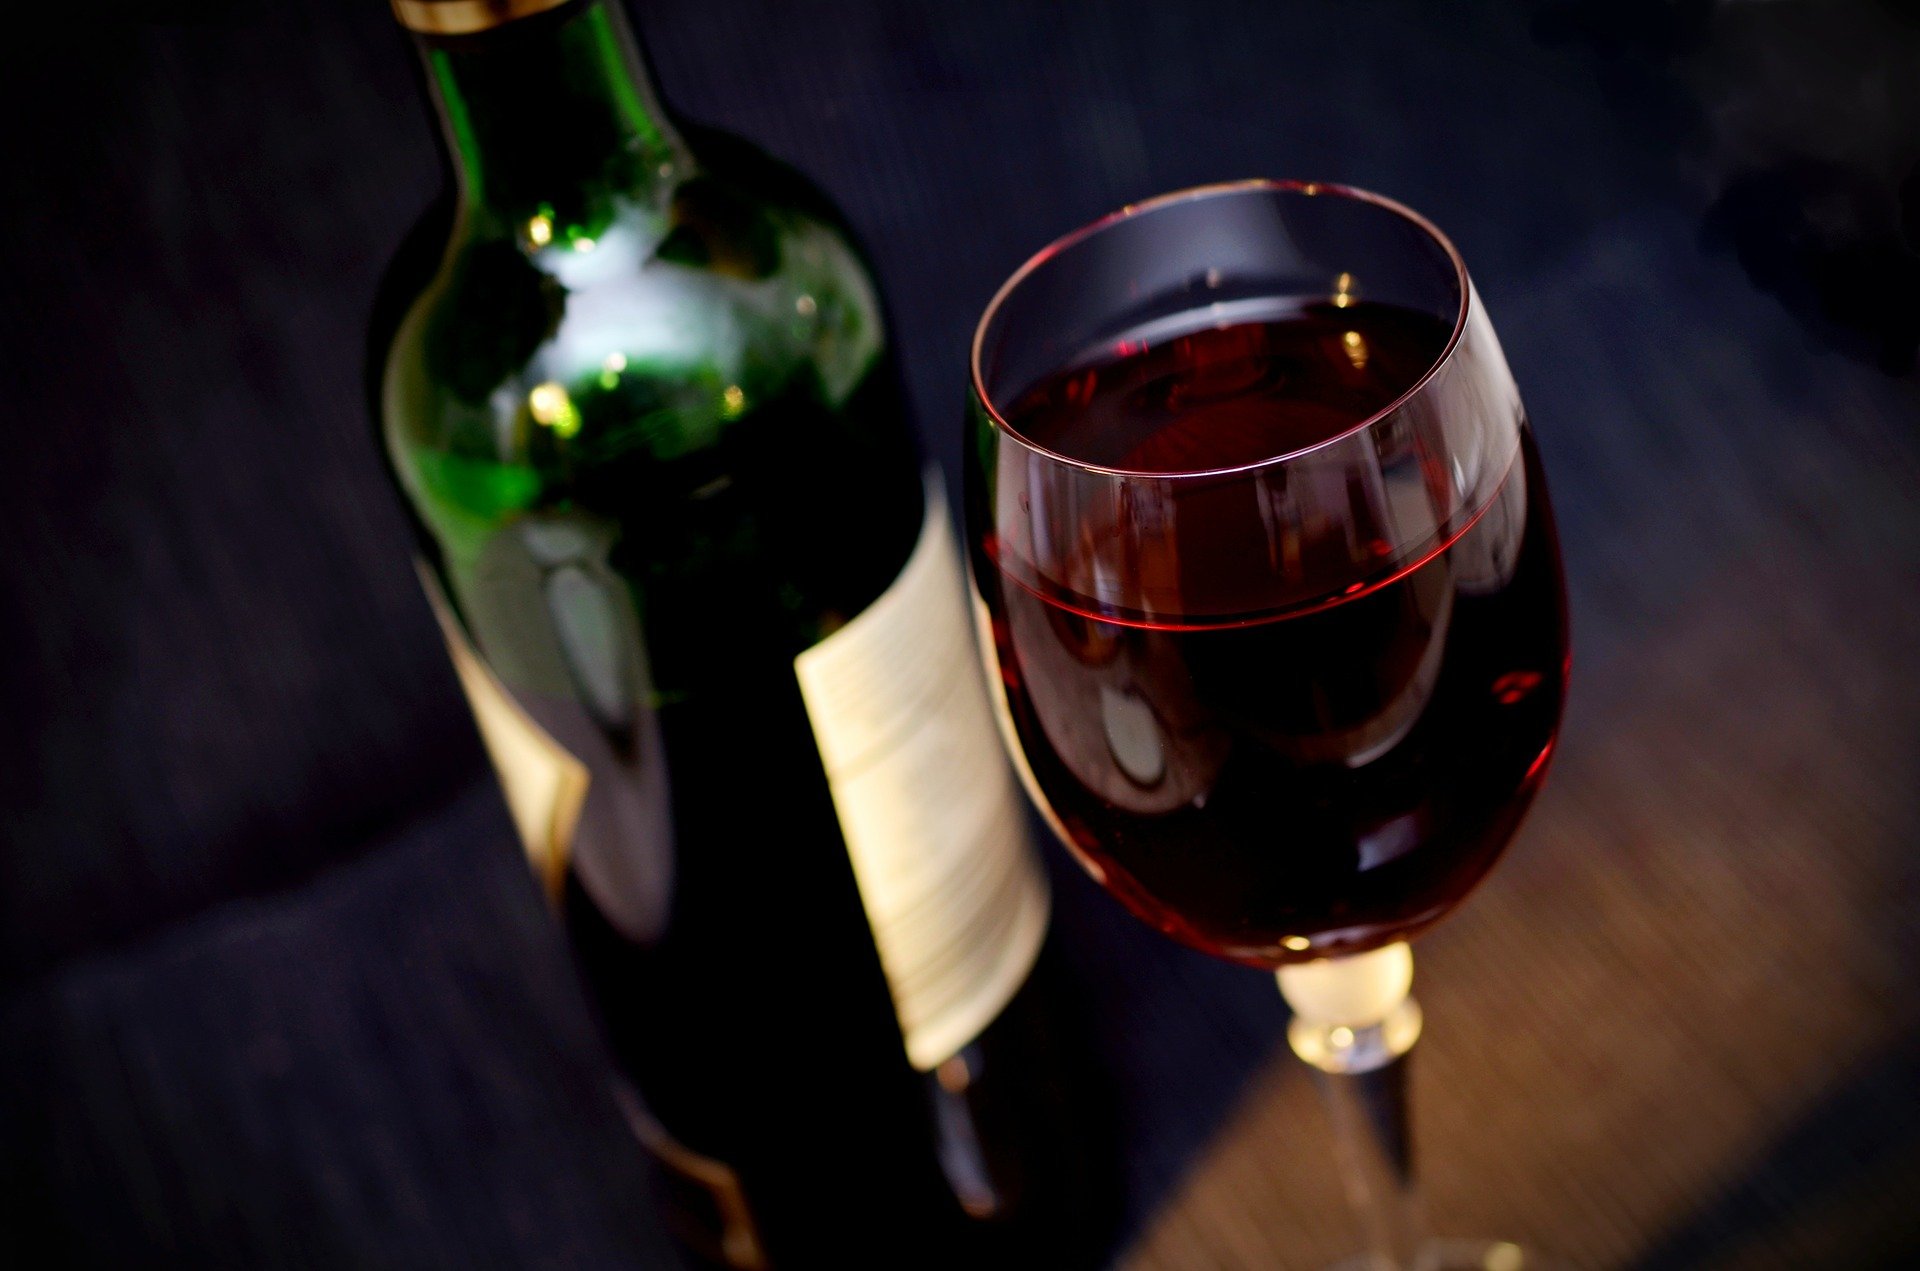 A glass of red wine alongside a wine bottle. | Photo: Pxabay/congerdesign